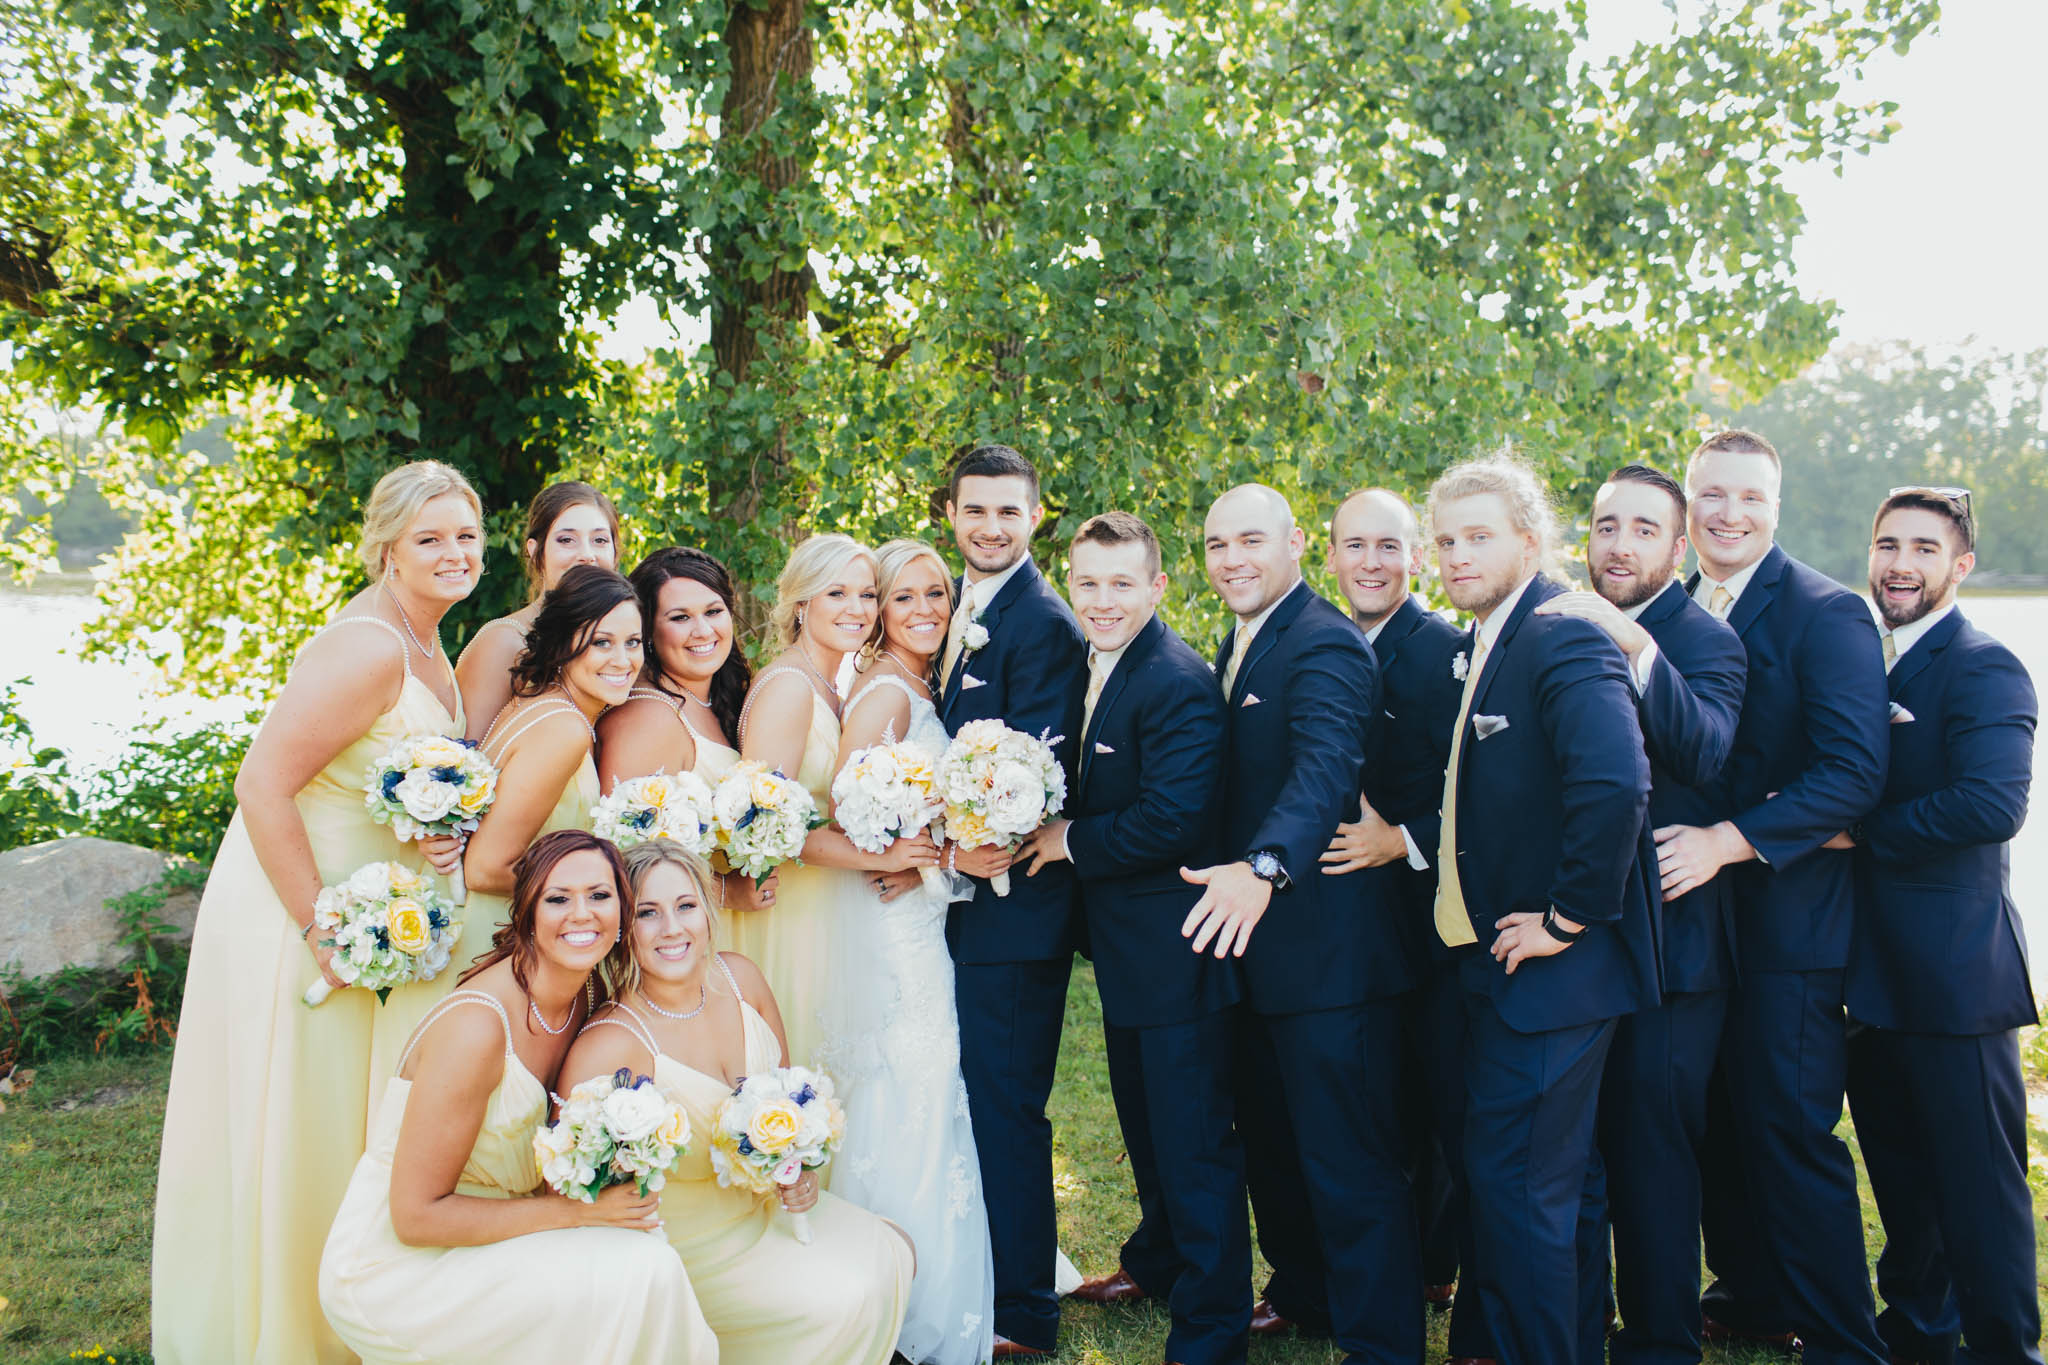 Jillian VanZytveld Photography - Grand Rapids Lifestyle Wedding Photography - 143.jpg